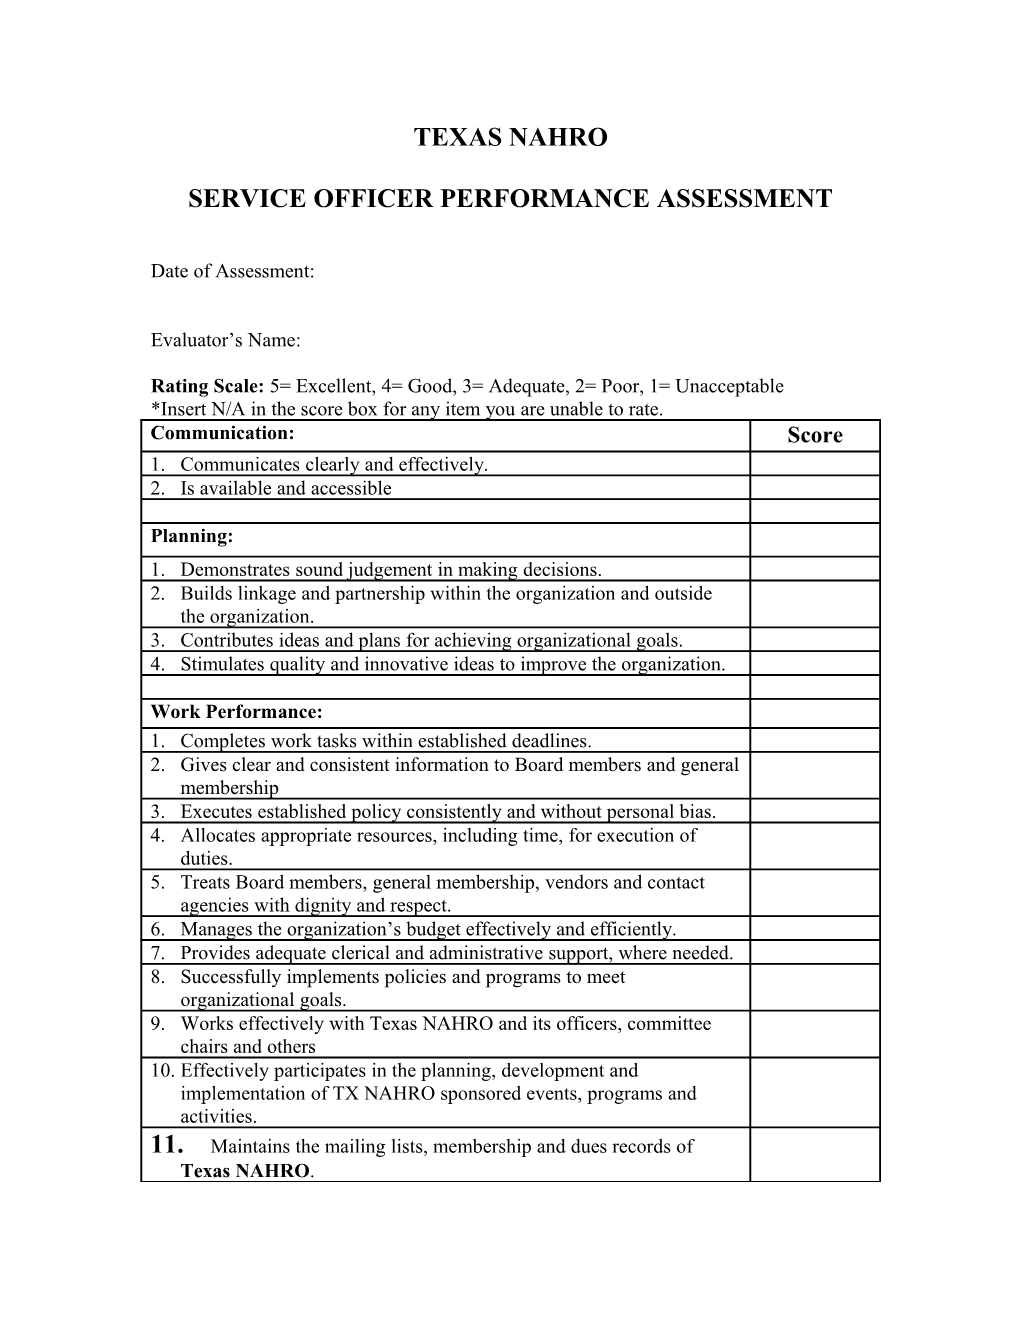 Service Officer Performance Assessment